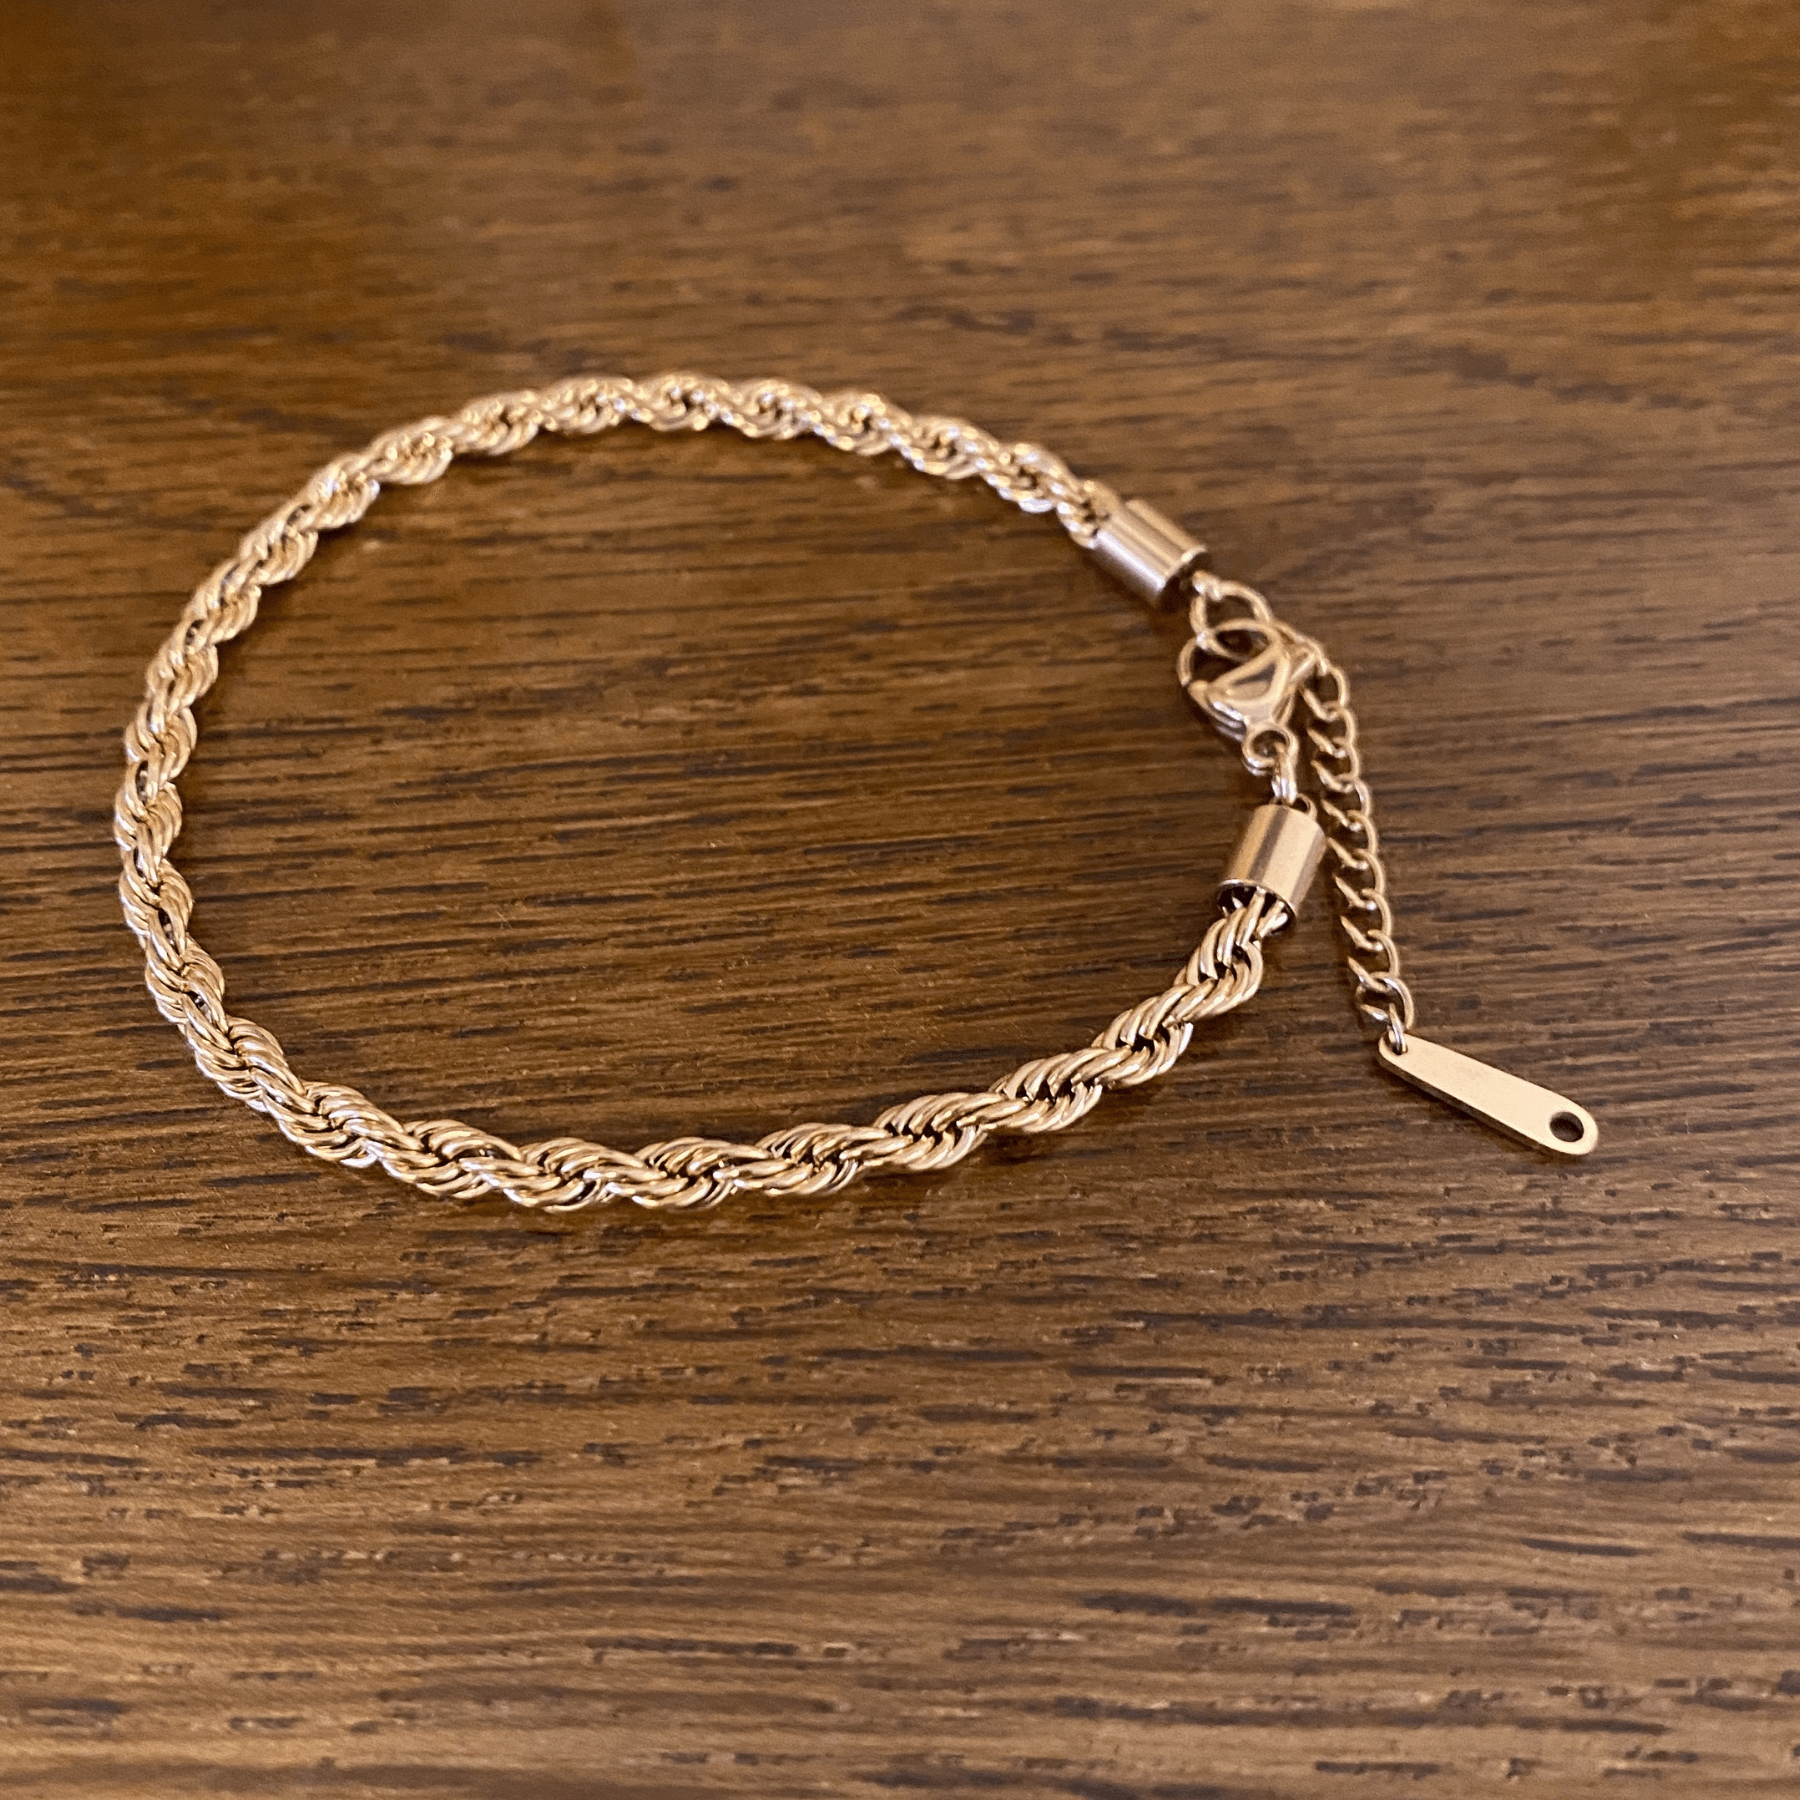 Rose Gold Classic Braided Rope Anklet/Bracelet - JACK